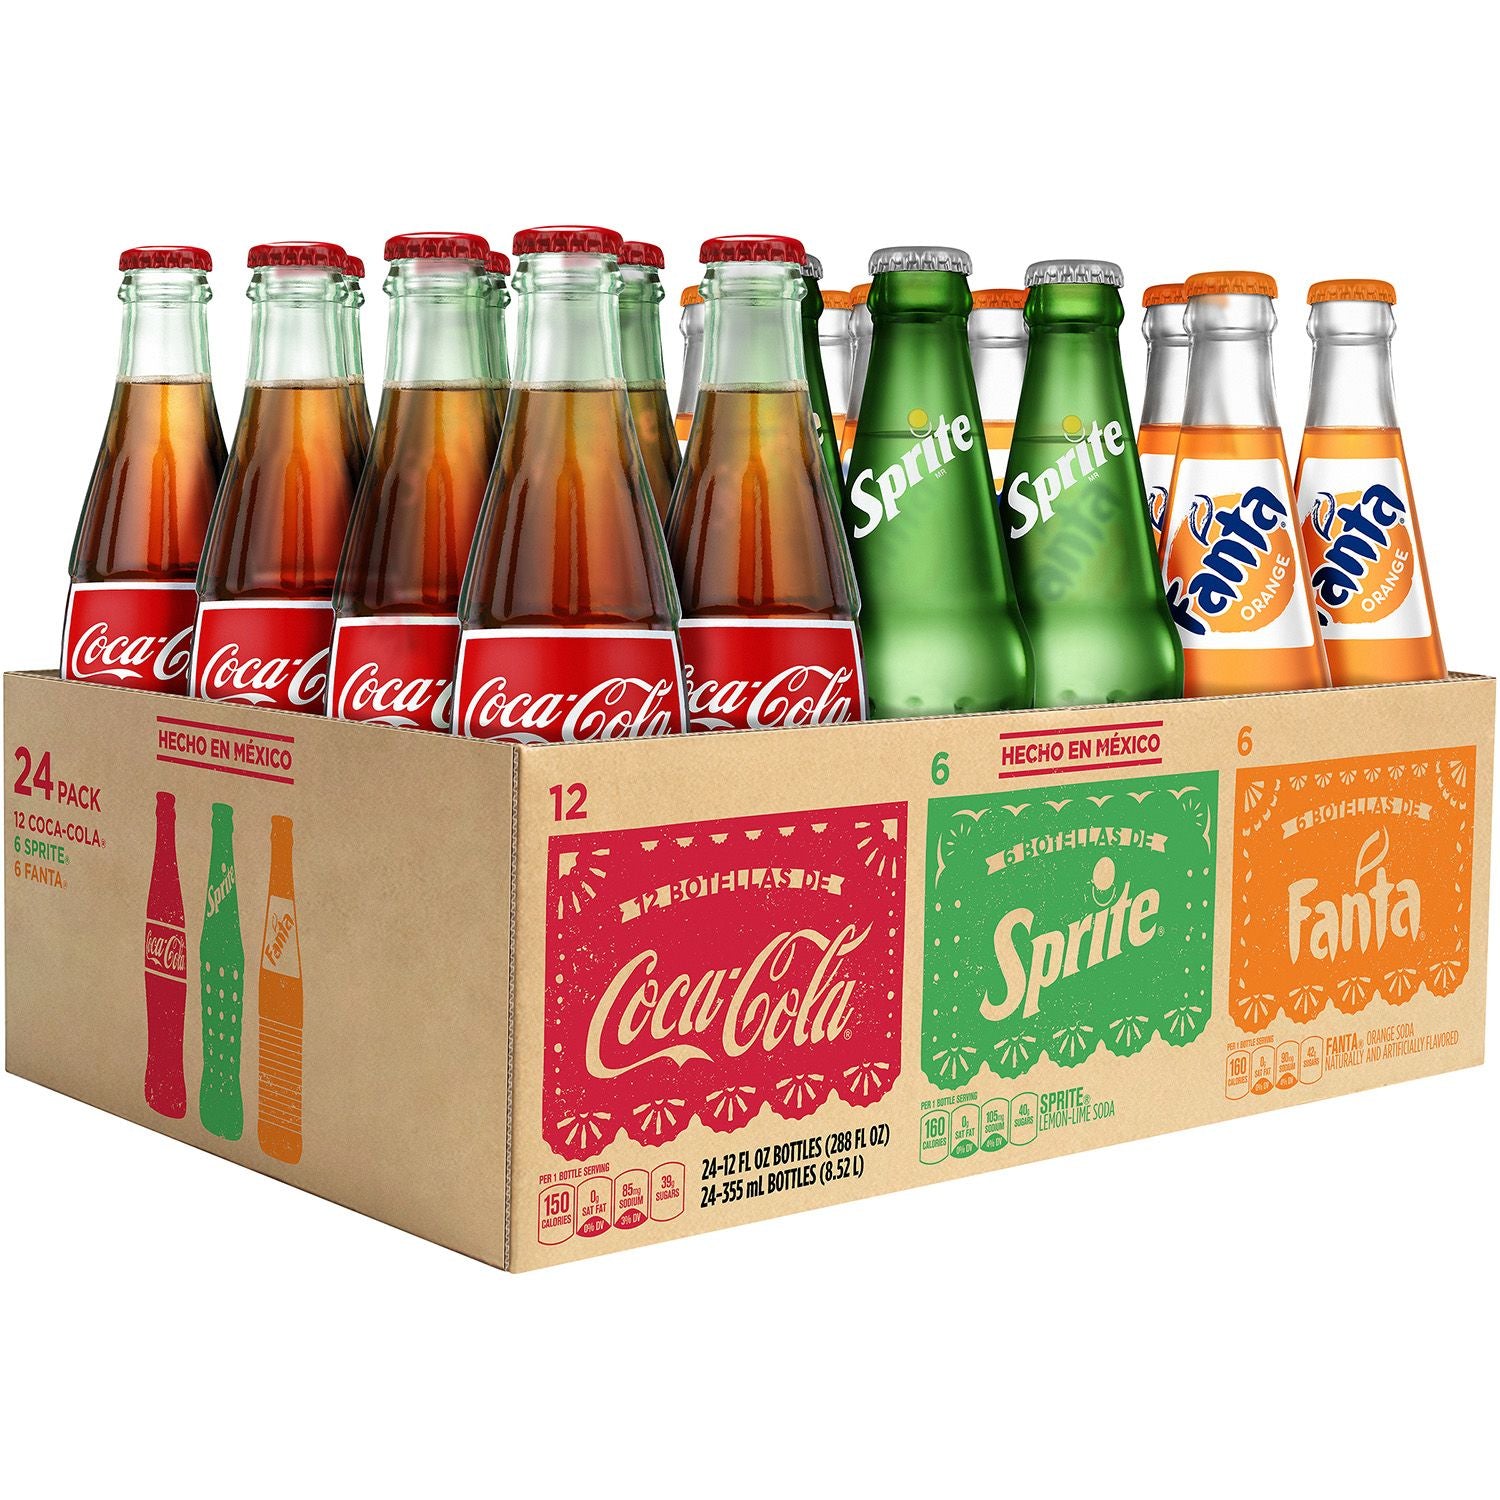 Coca@Cola Bottles de Mexico Variety Pack - 12oz/24pk